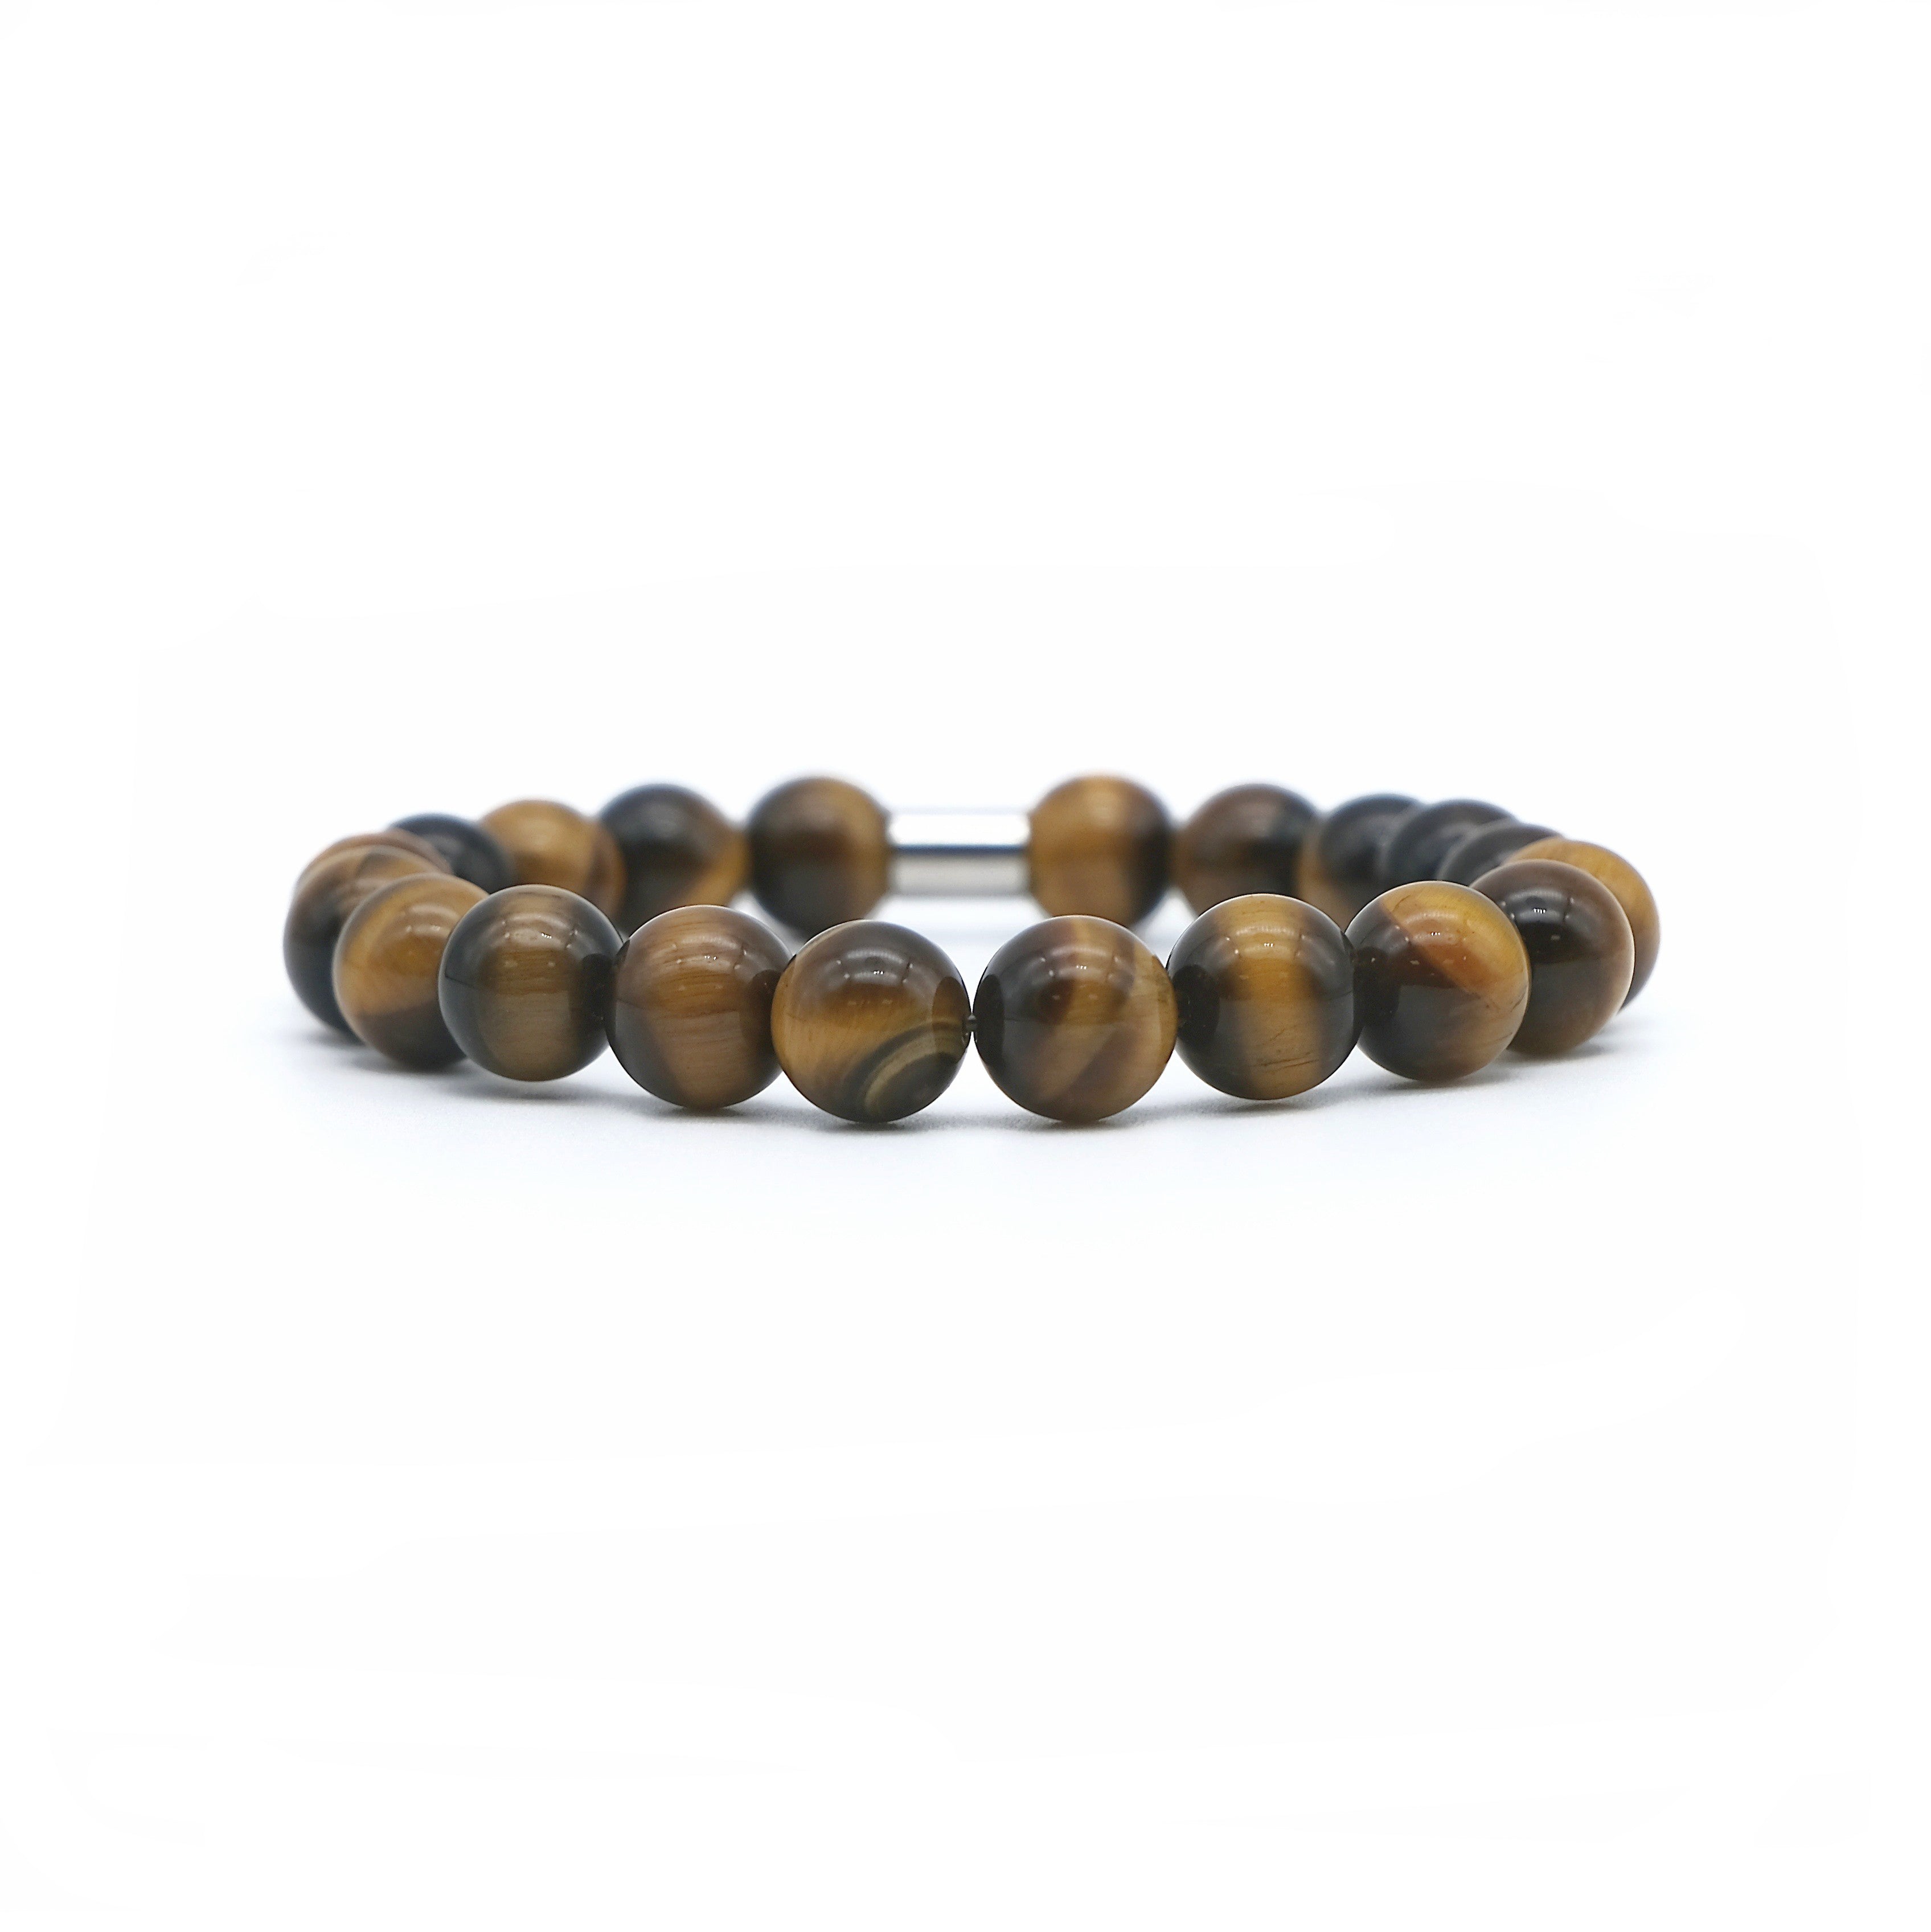 tiger eye gemstone bracelet in 10mm beads with stainless steel column bead